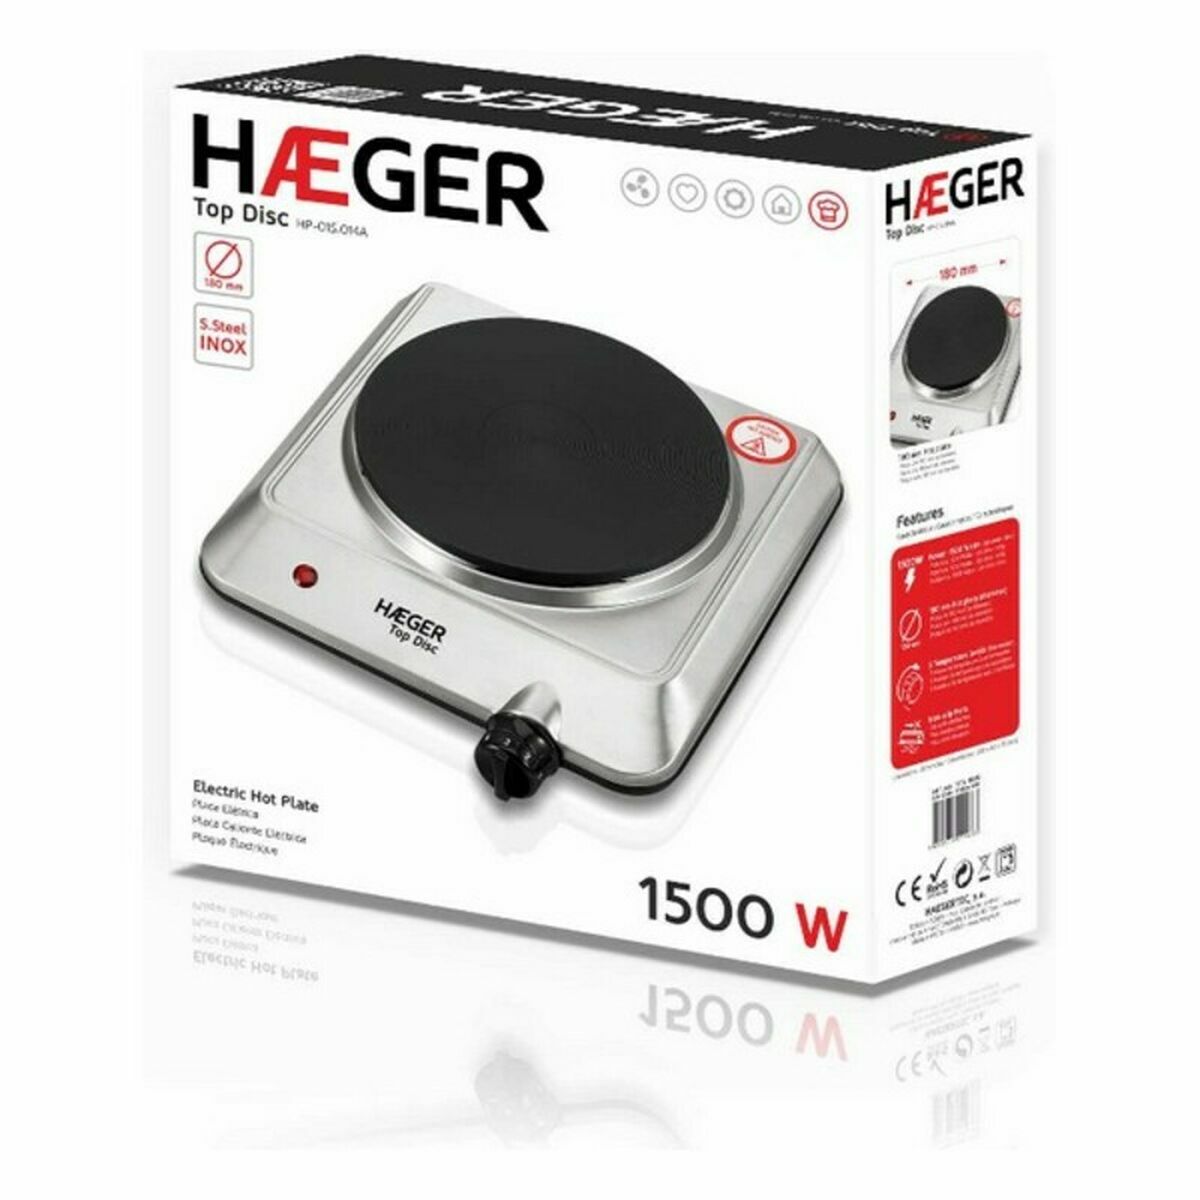 Haeger HP-01S.014A Elektroherd, Edelstahl, 1 Herd, Schwarz Silber, 1500 W